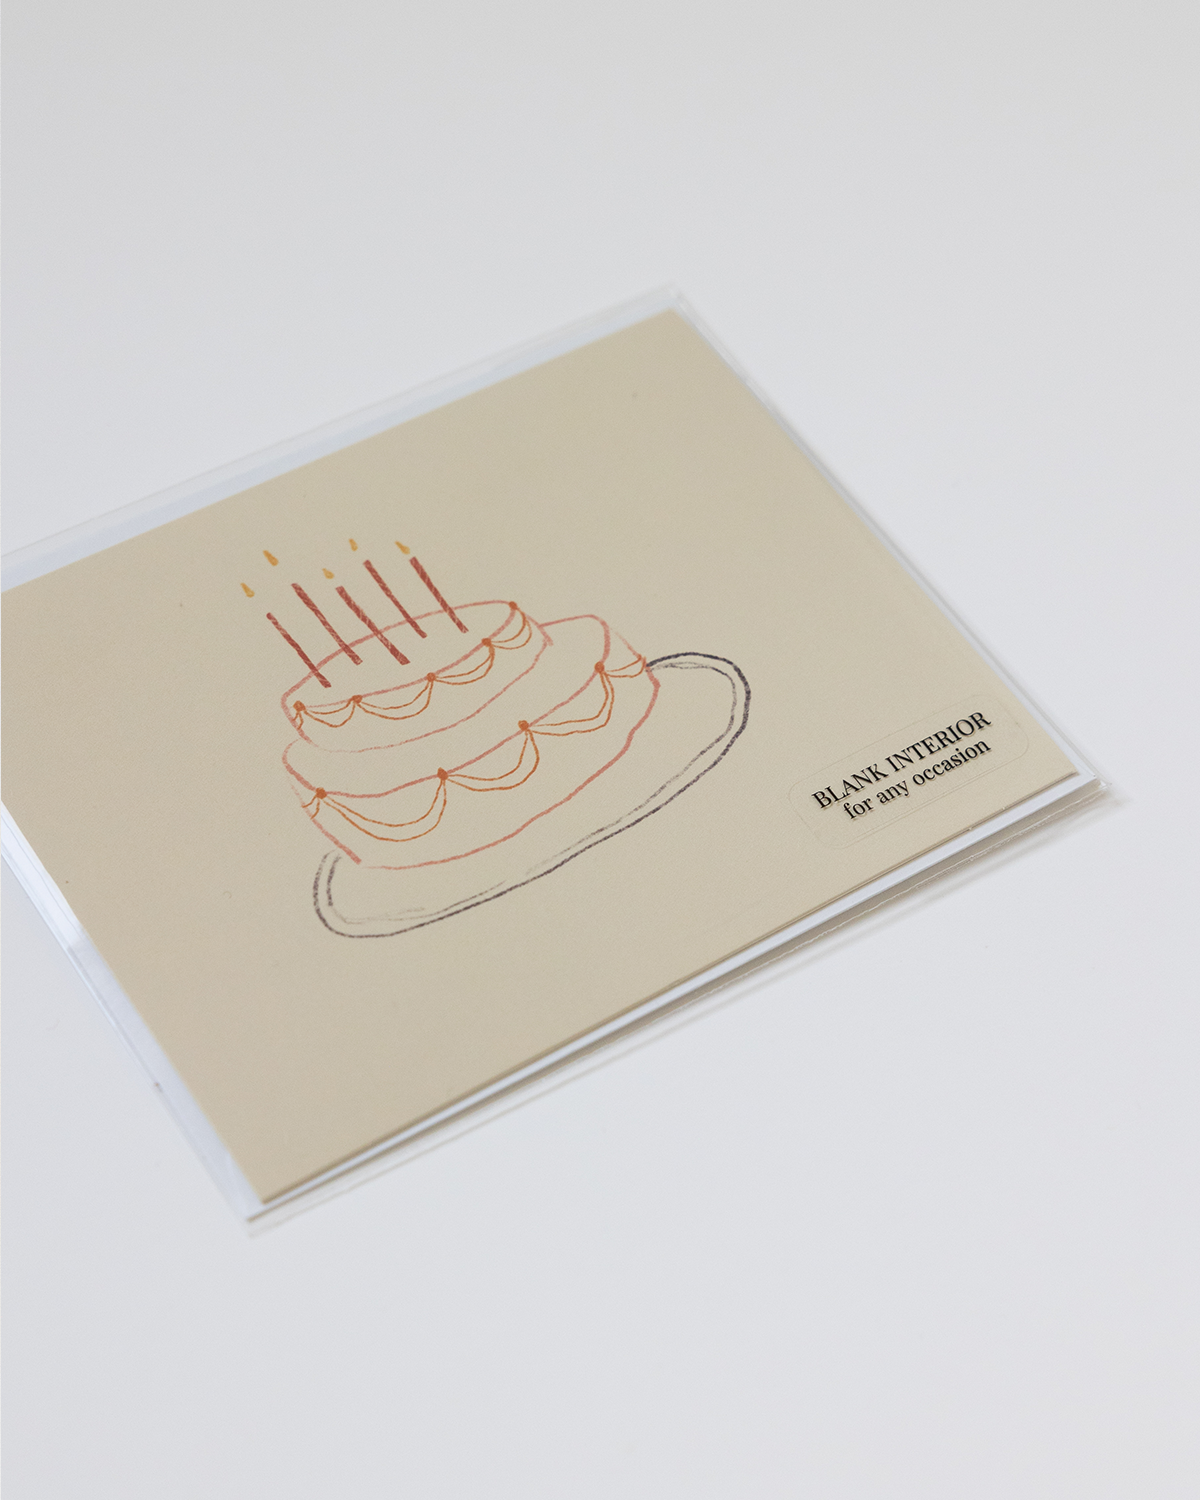 Cake Greeting Card (Blank Interior)